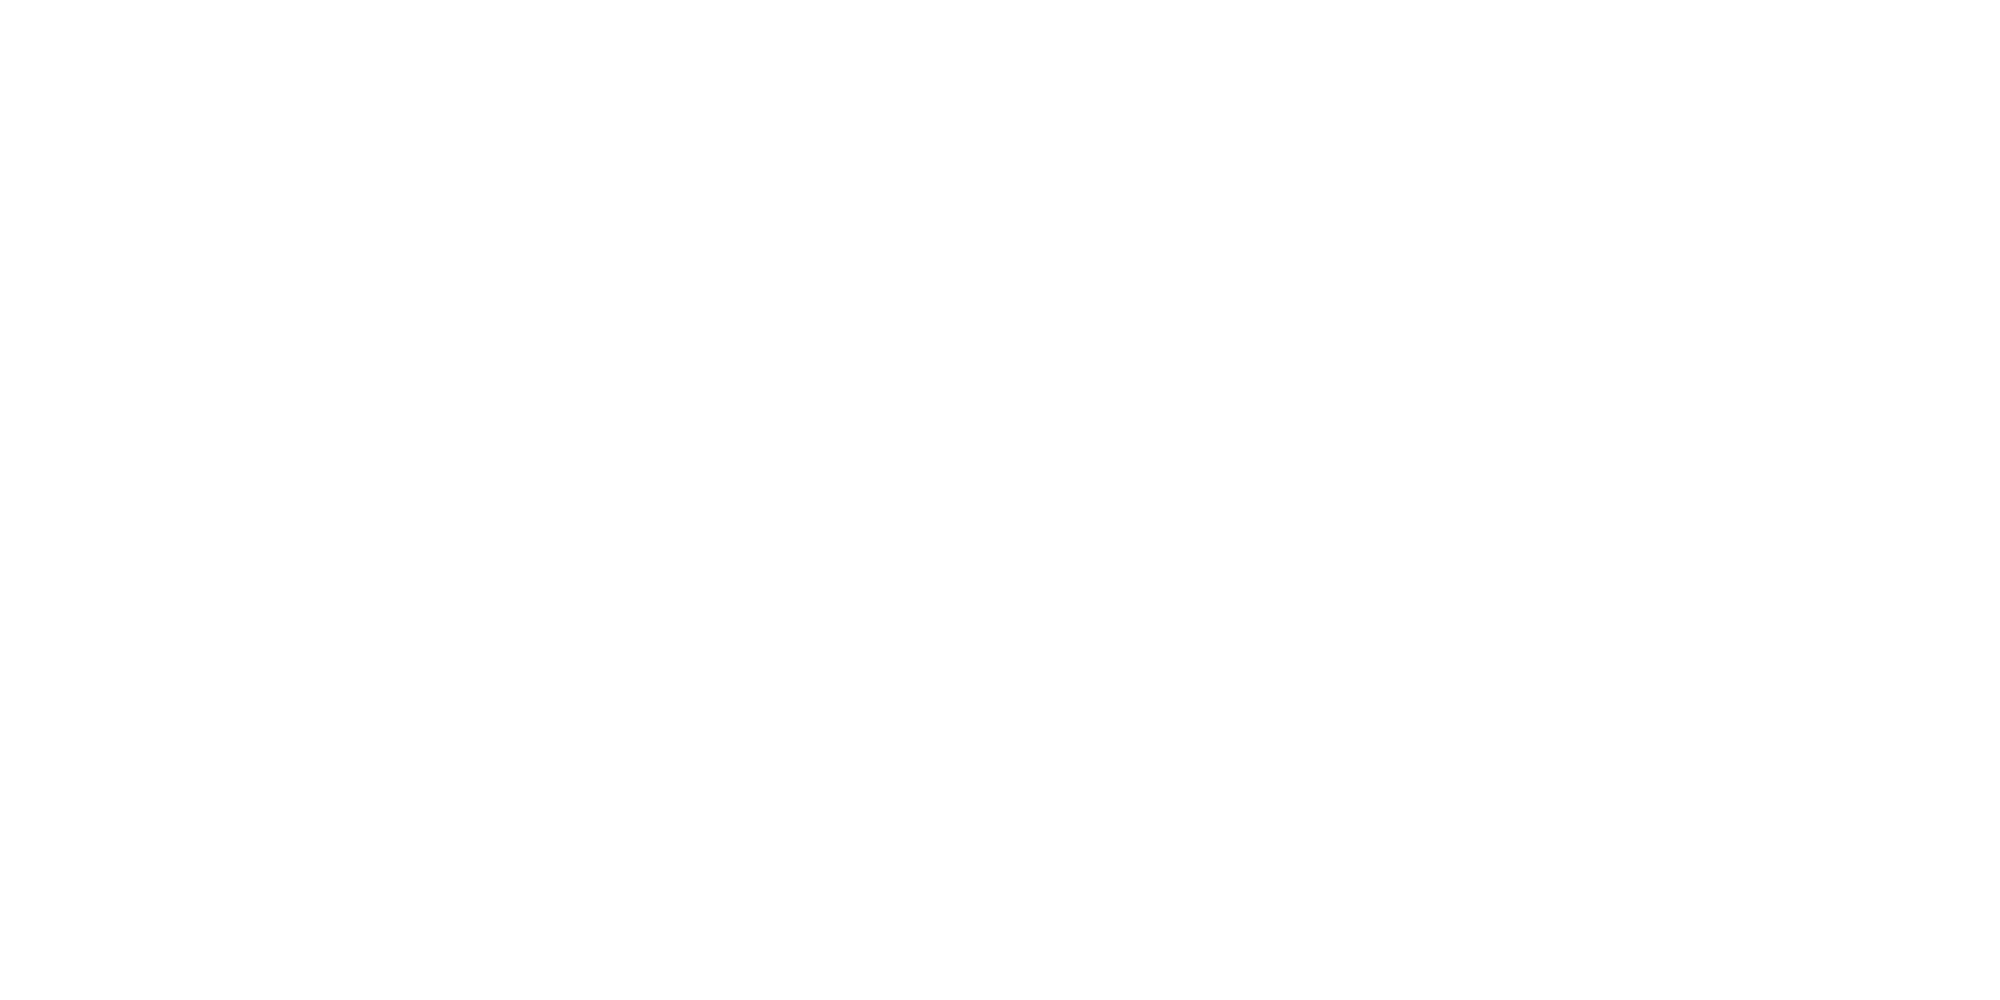 synology tplink logo transparant